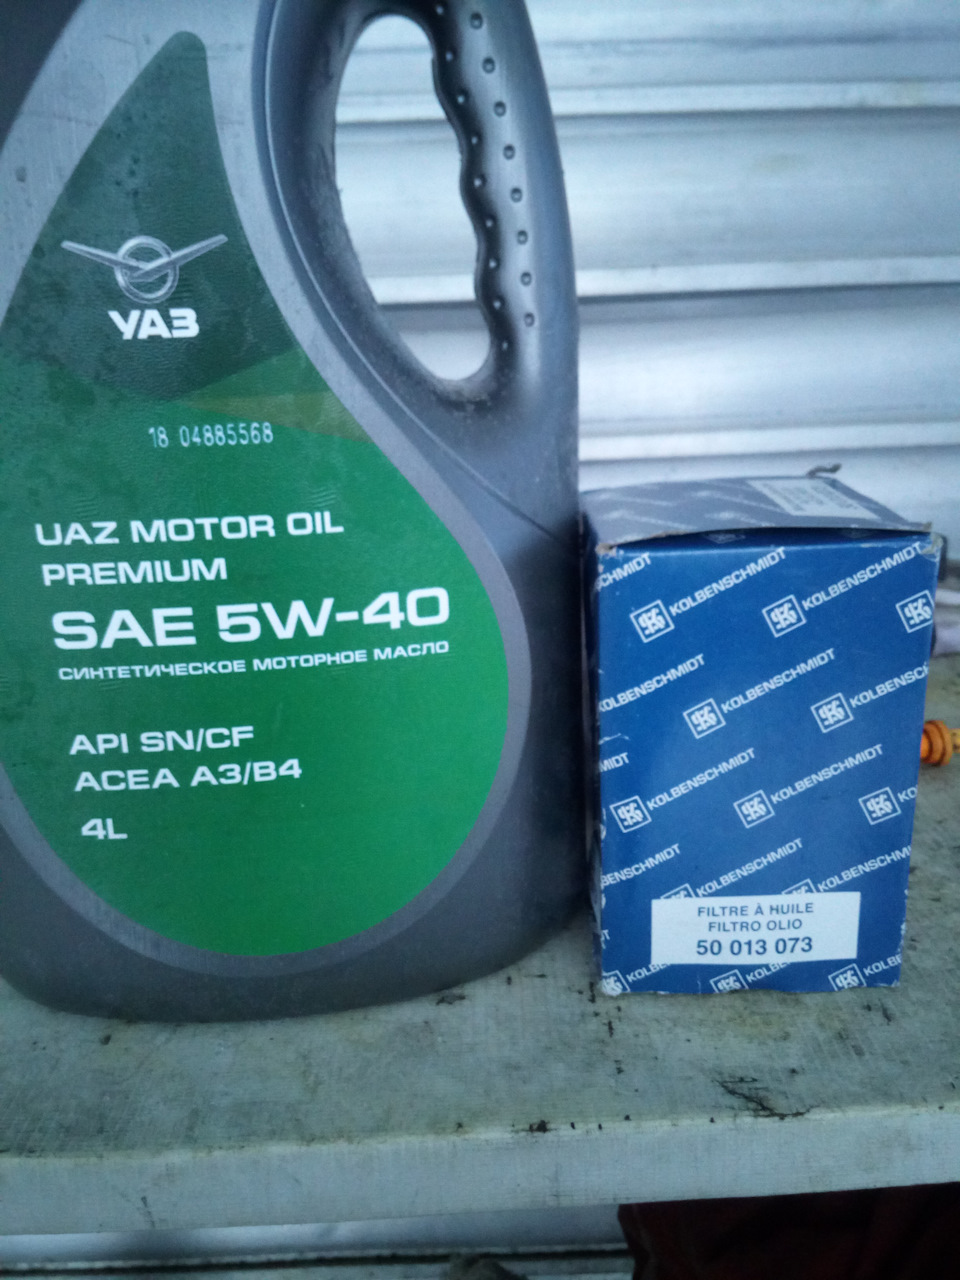 Масло уаз отзывы. УАЗ Premium 5w-40. UAZ Motor Oil 5w-40. Масло UAZ Motor Oil Premium 5w-40. UAZ Motor Oil Premium 5w-40 API SN.